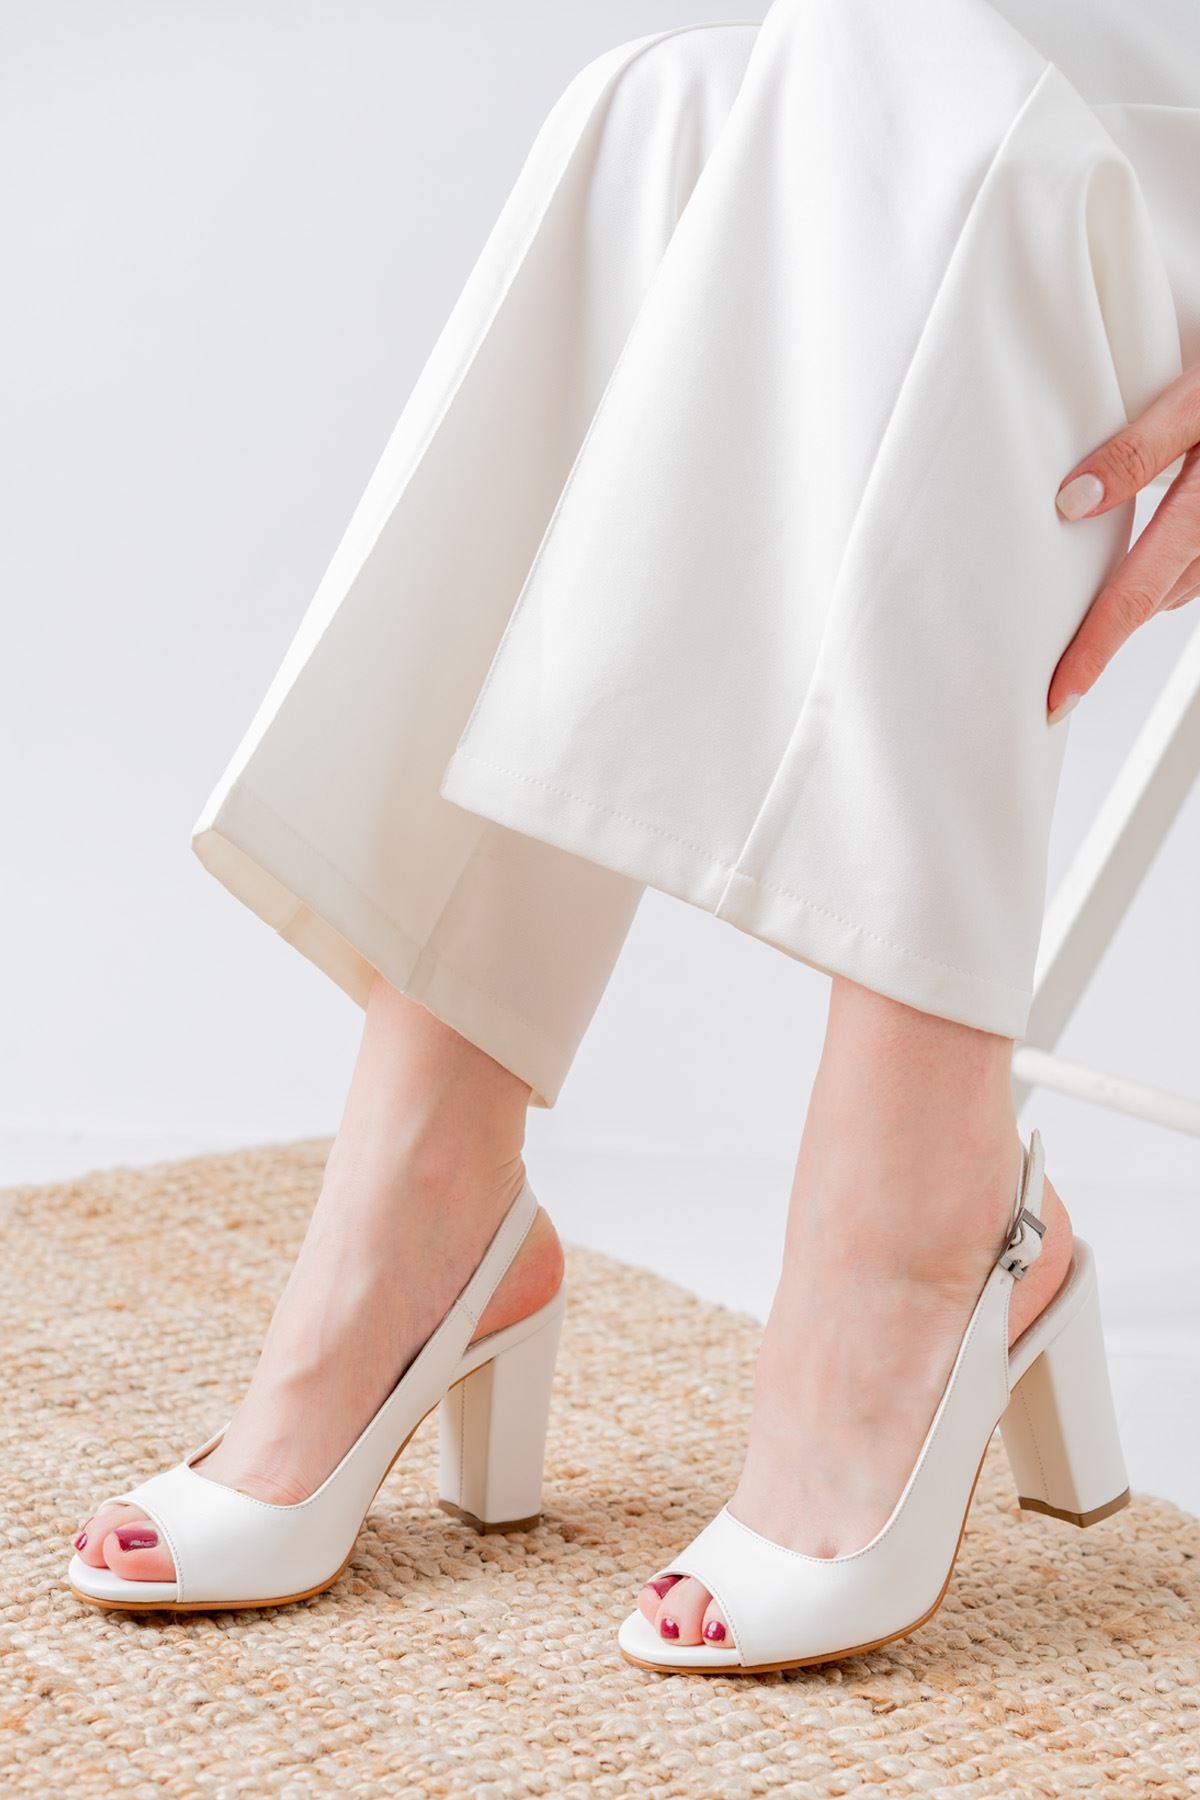 Meira White Skin Detail Low Heel Women's Shoes - STREET MODE ™